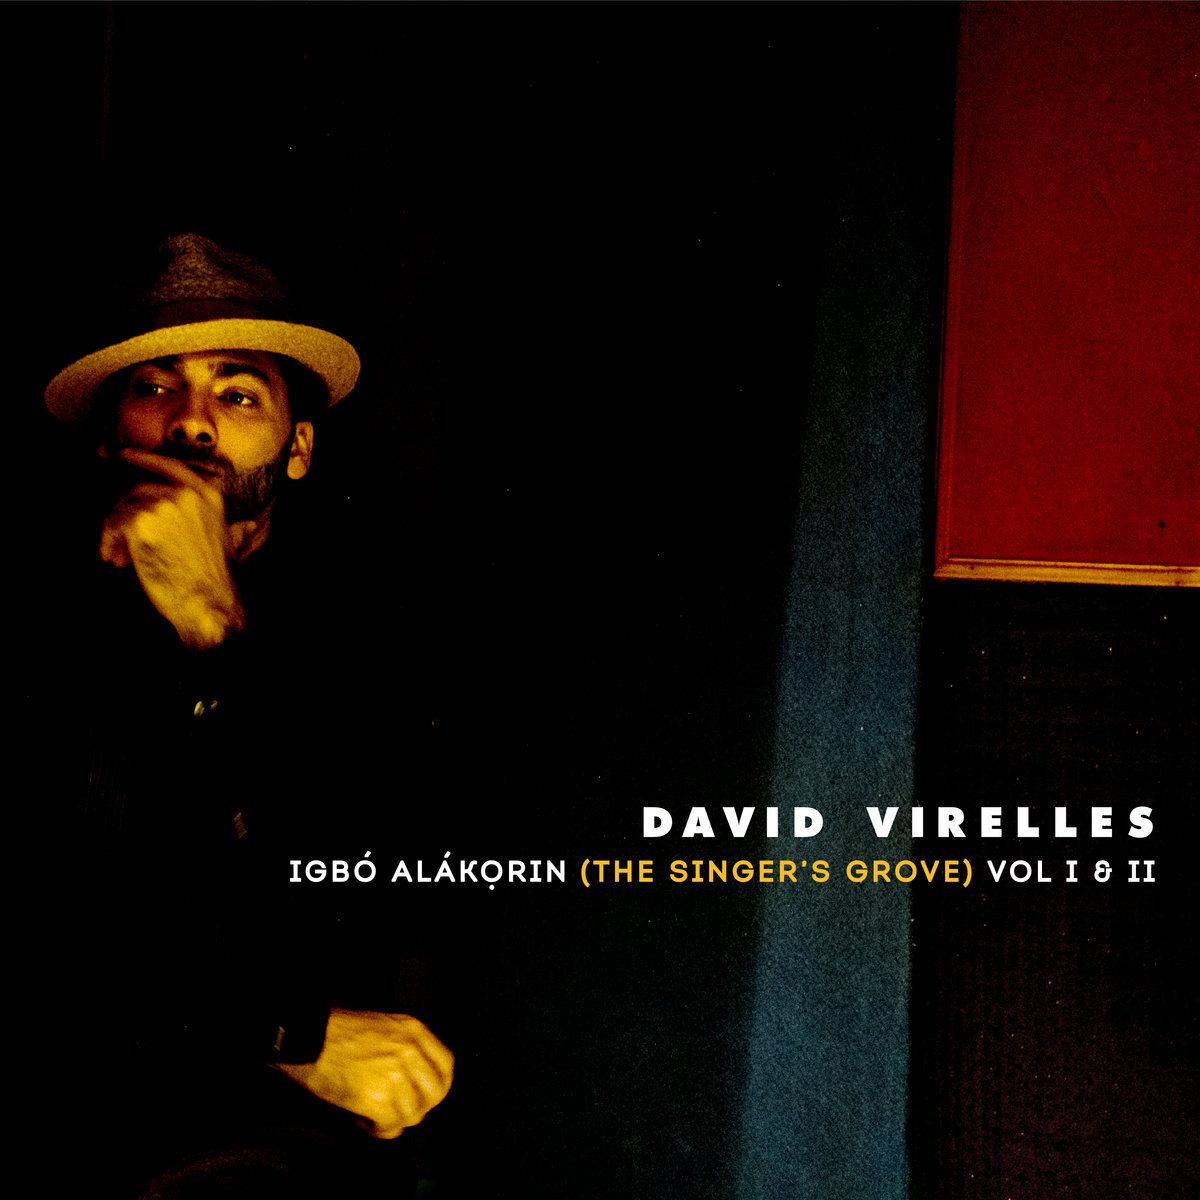 DAVID VIRELLES / ダヴィ・ビレージェス / IGBO ALAKORIN (THE SINGER’S GROVE) VOL. I AND II